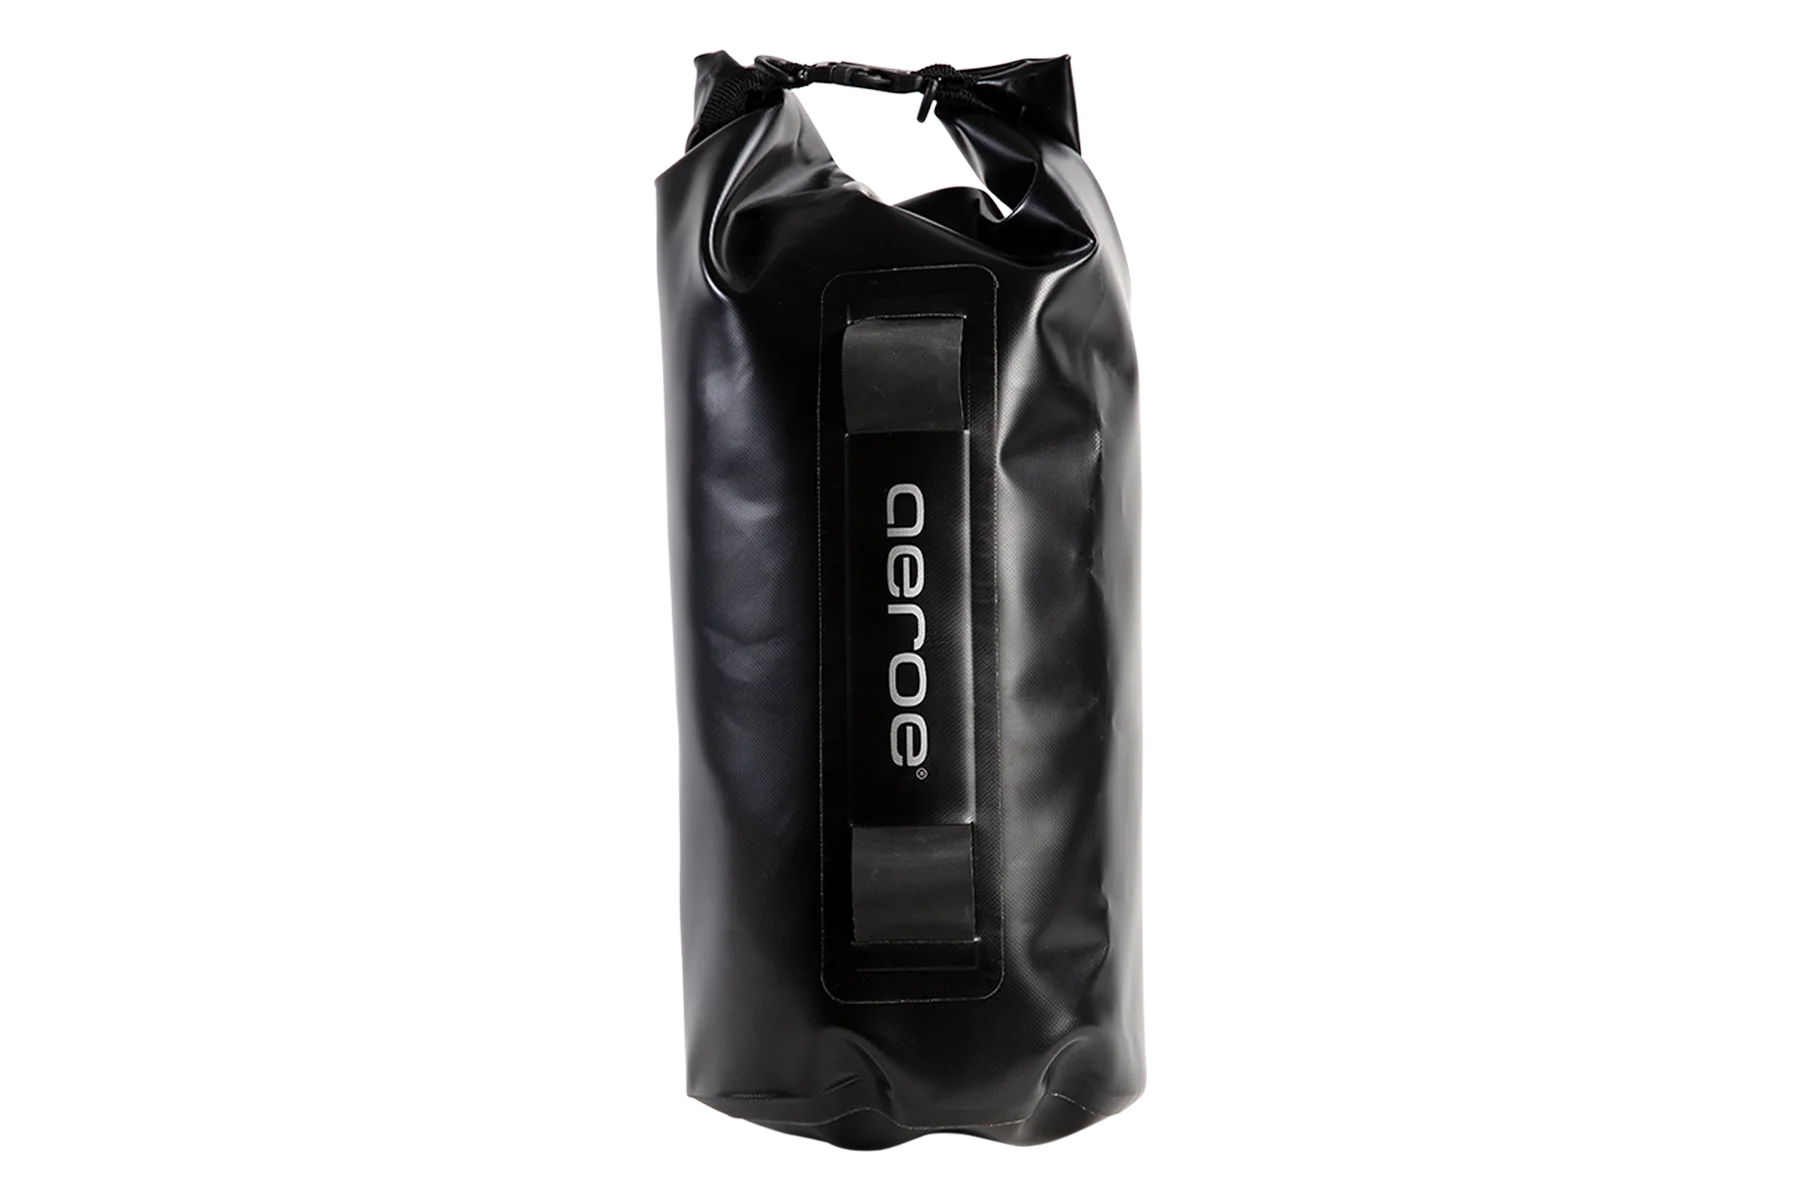 12L Heavy Duty Dry Bag Black – Aeroe